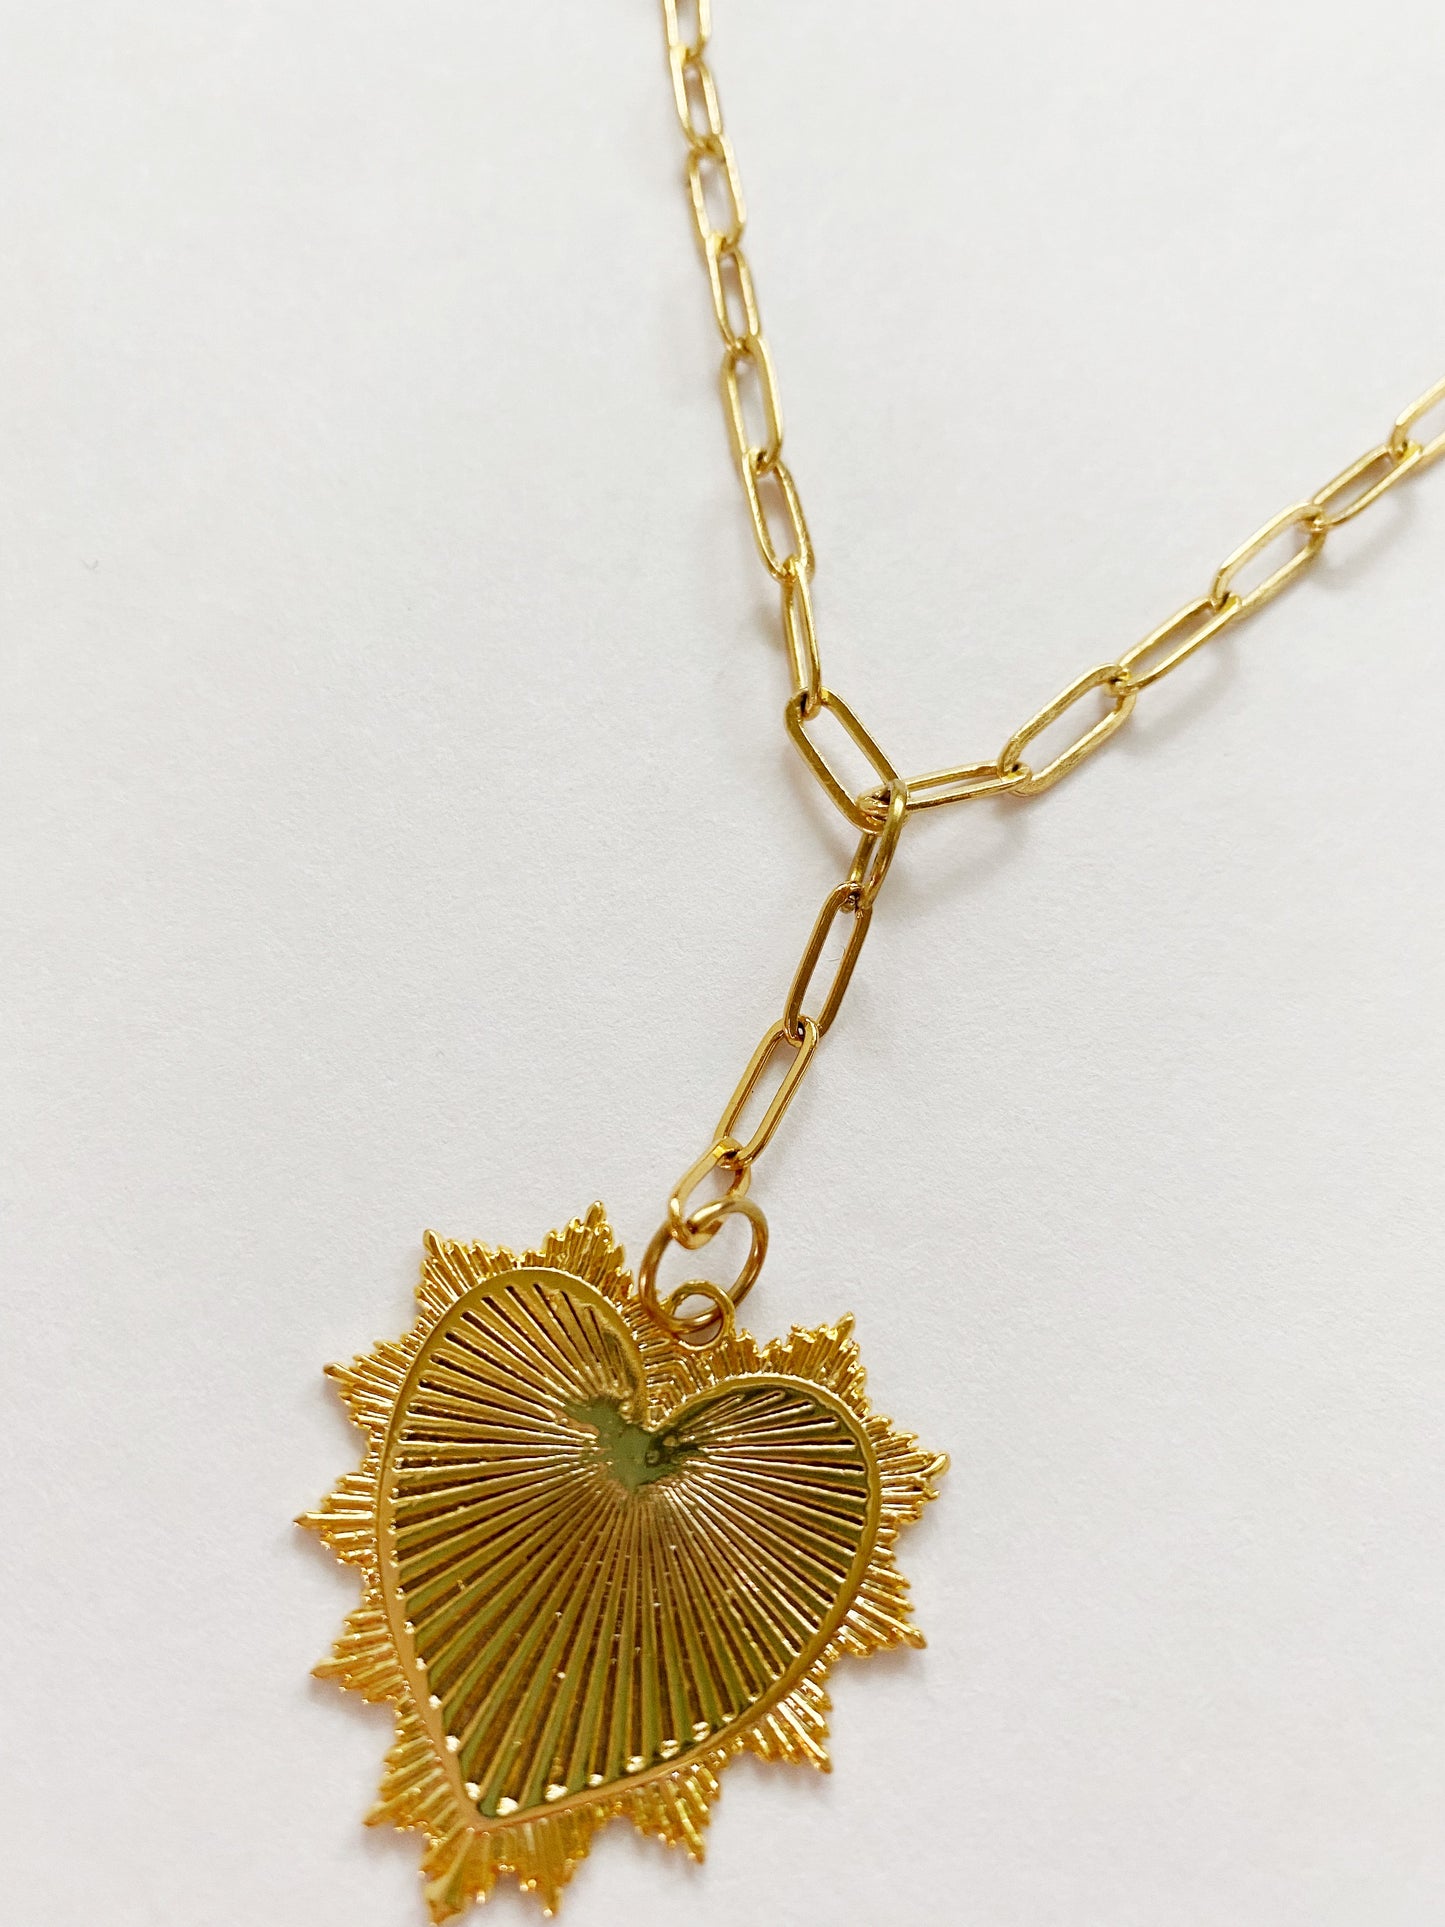 Golden Heart Drop Necklace